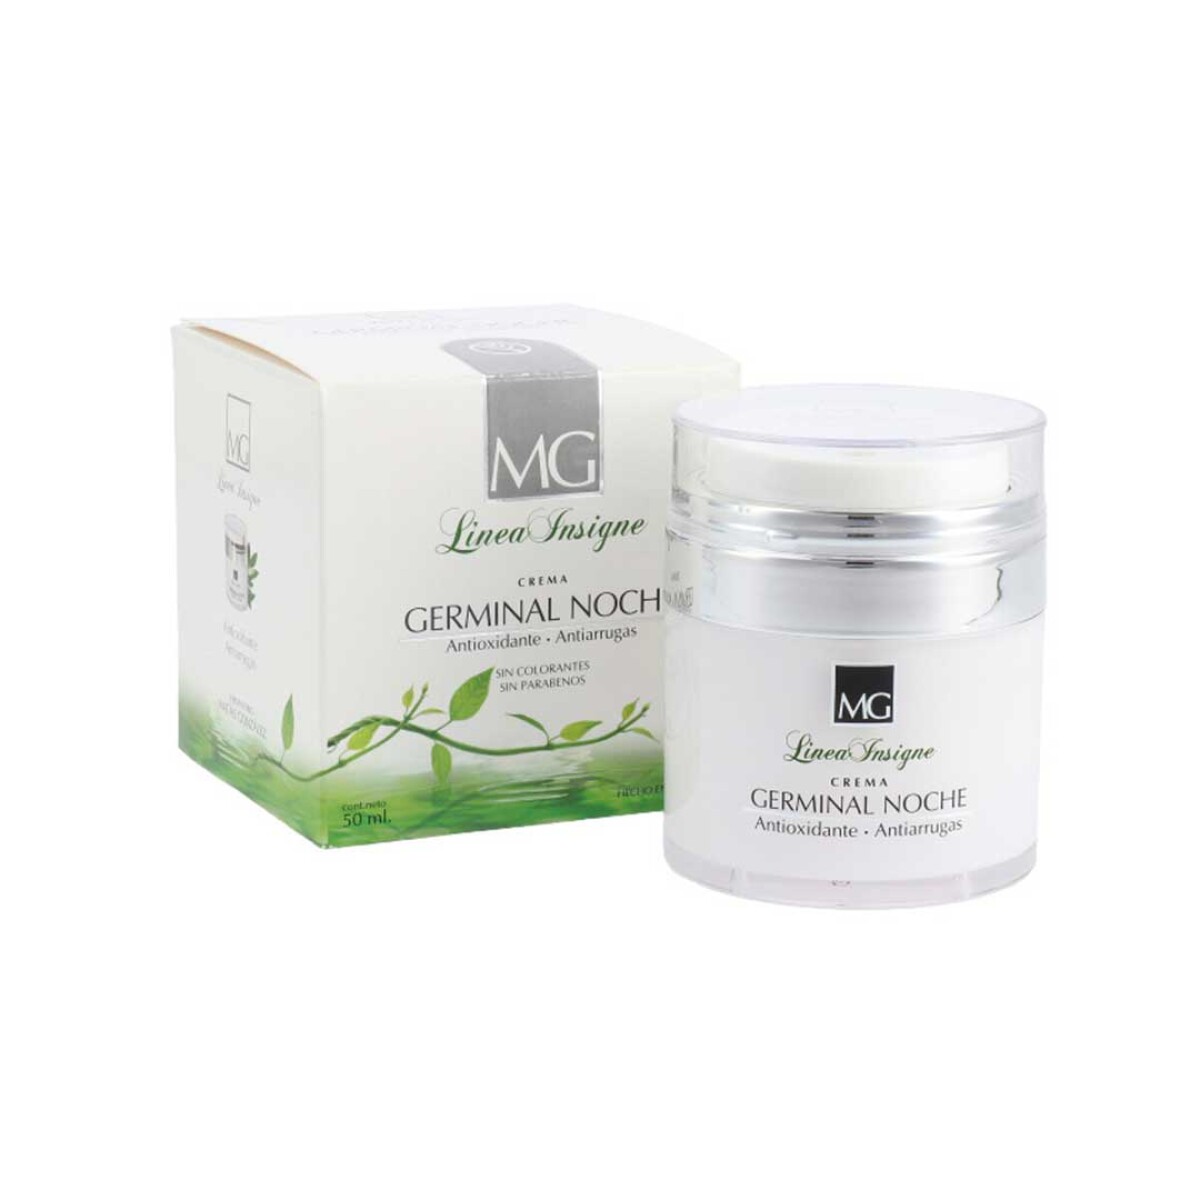 Crema Germinal Noche 50ml Antioxidante Matias Gonzalez - 001 